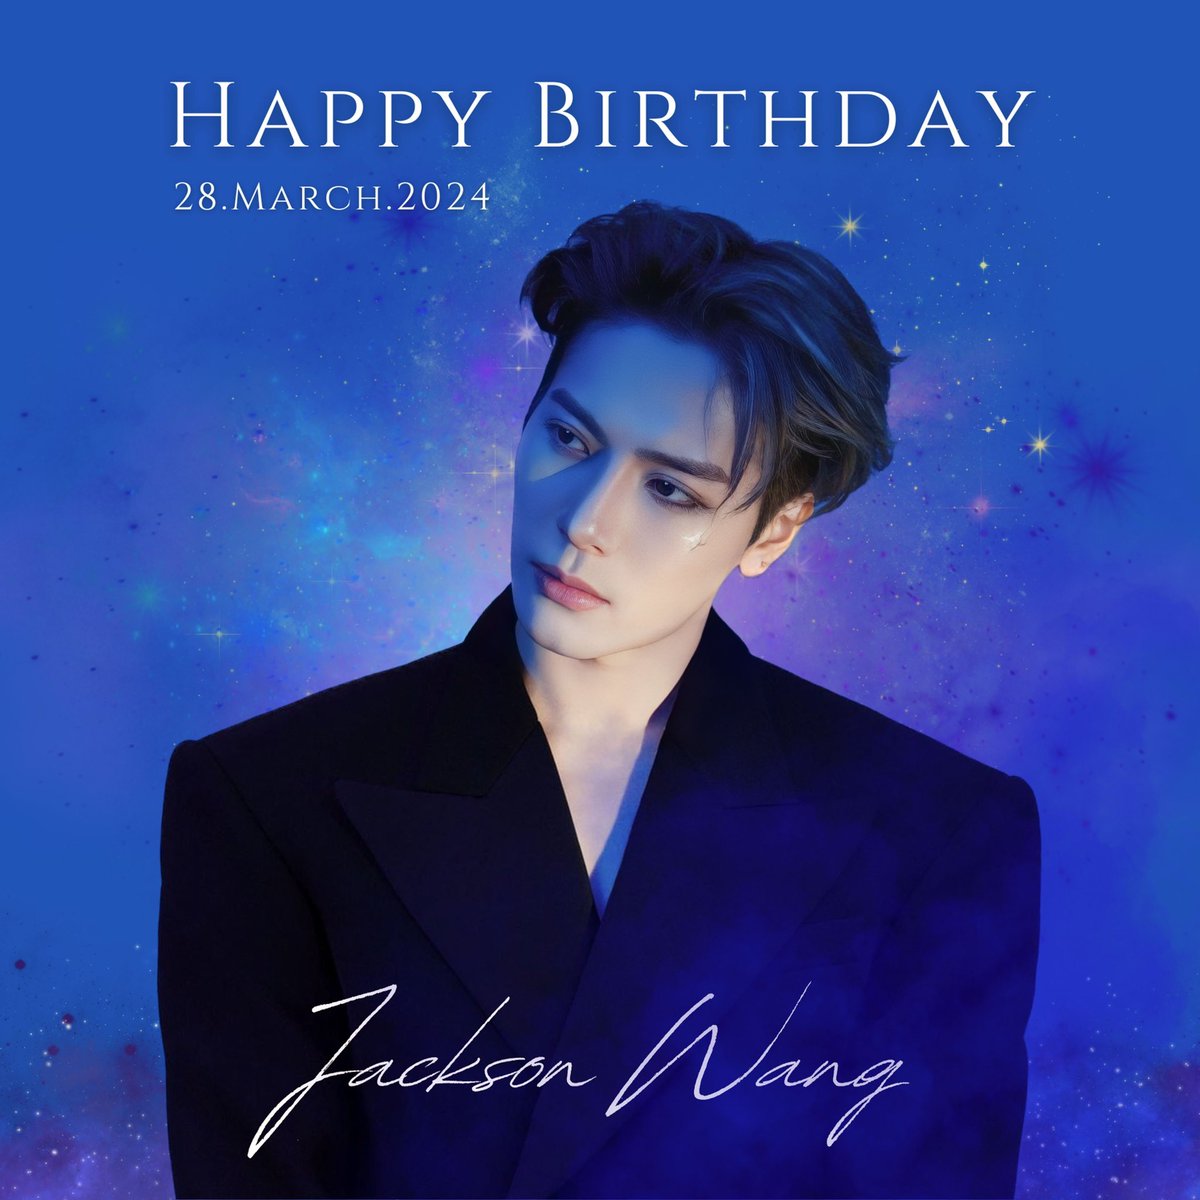 Happiest Birthday Jackson Wang  
Thank you for being precious Jackson Wang. ❤︎

 #CHUANGAsia #CHUANGAsia2024 #JacksonWang #CHUANGASIAxRYCE #CHUANGAsiaJacksonWang #王嘉尔 #잭슨 #MAGICJacksonDay #JACK30N